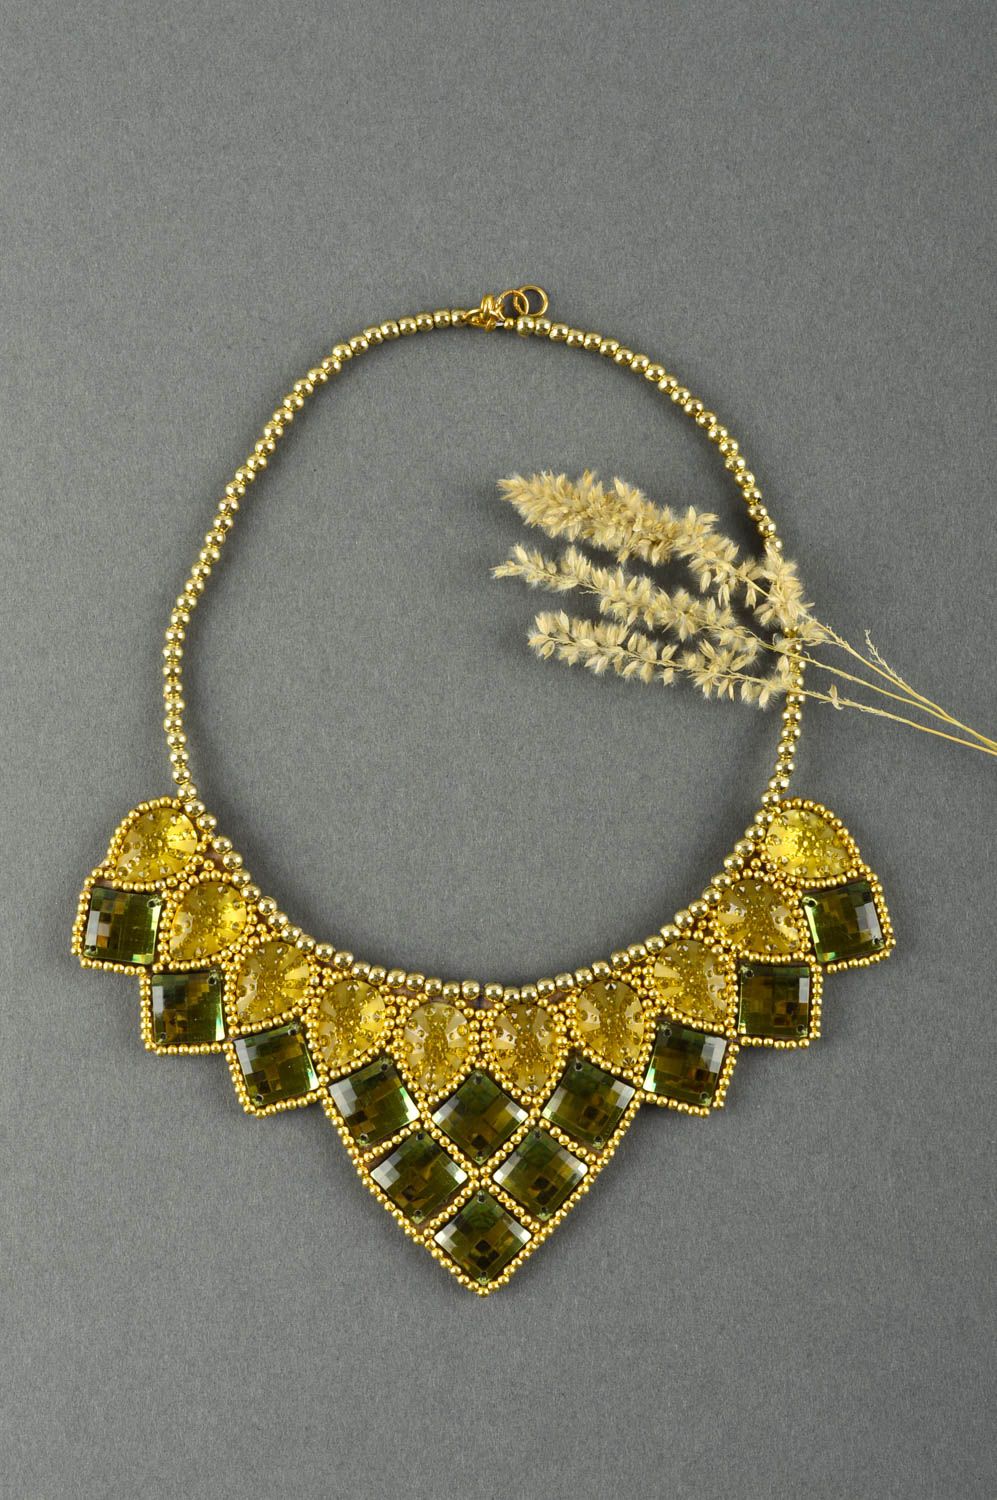 Handmade necklace designer accessory gift ideas elite jewelry bead necklace photo 1